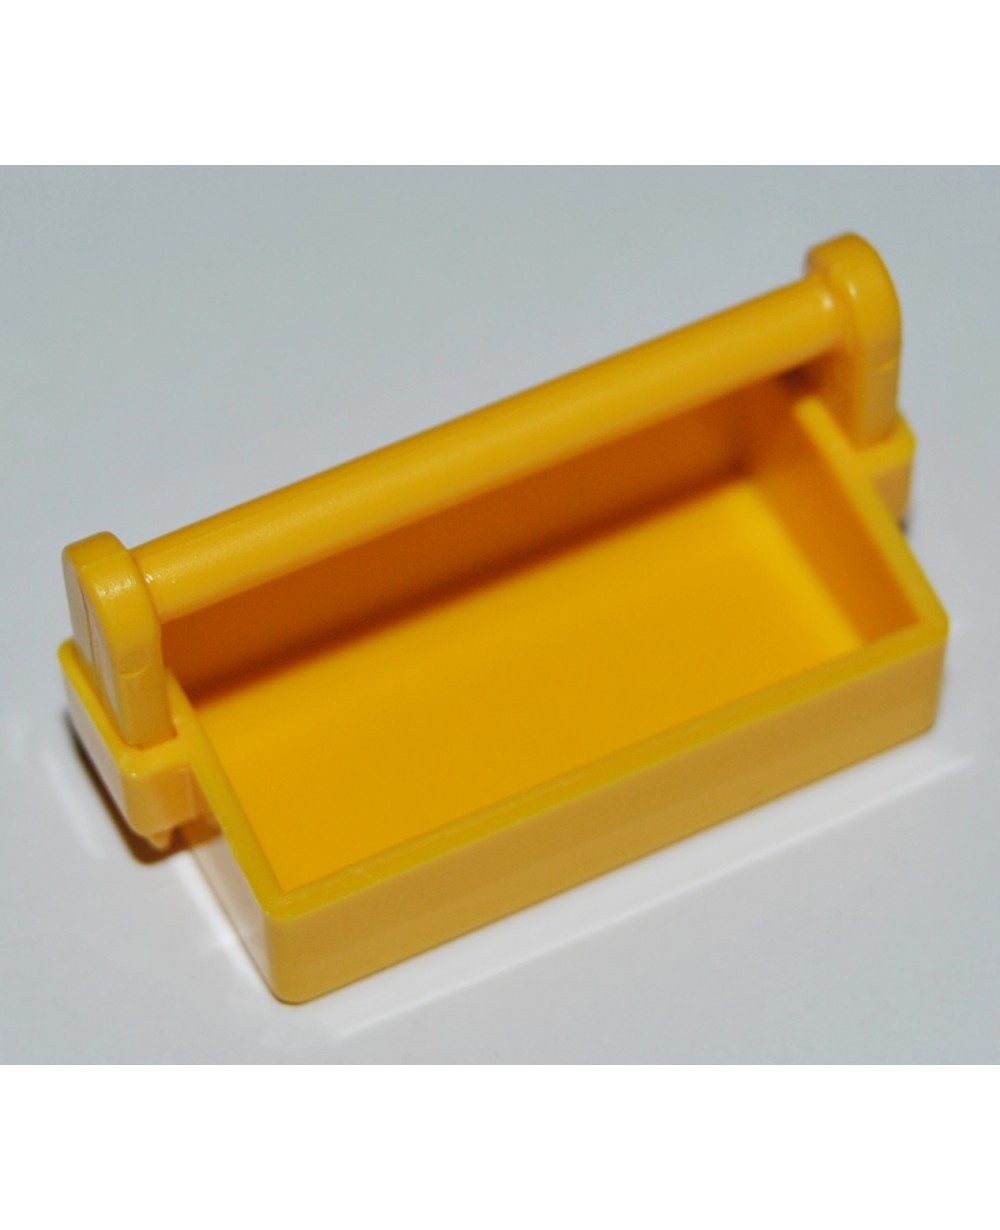 300630 Yellow box tools Playmobil